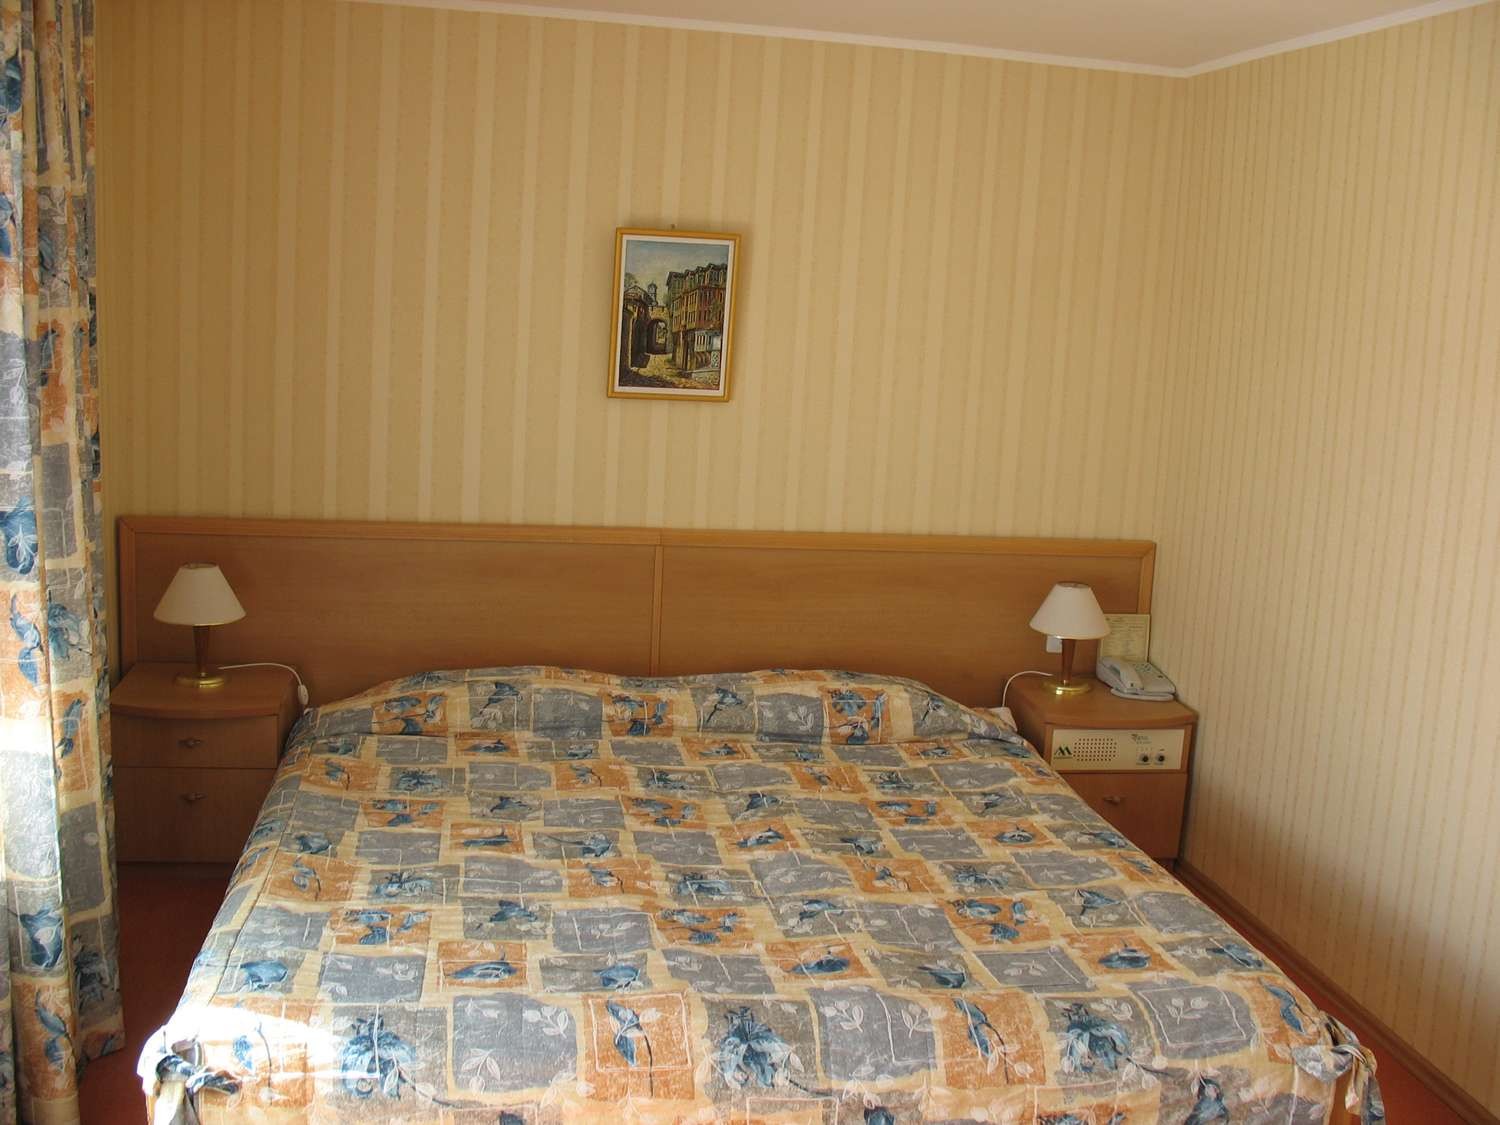 2 bedroom Apart, Grand Hotel Murgavets 4*